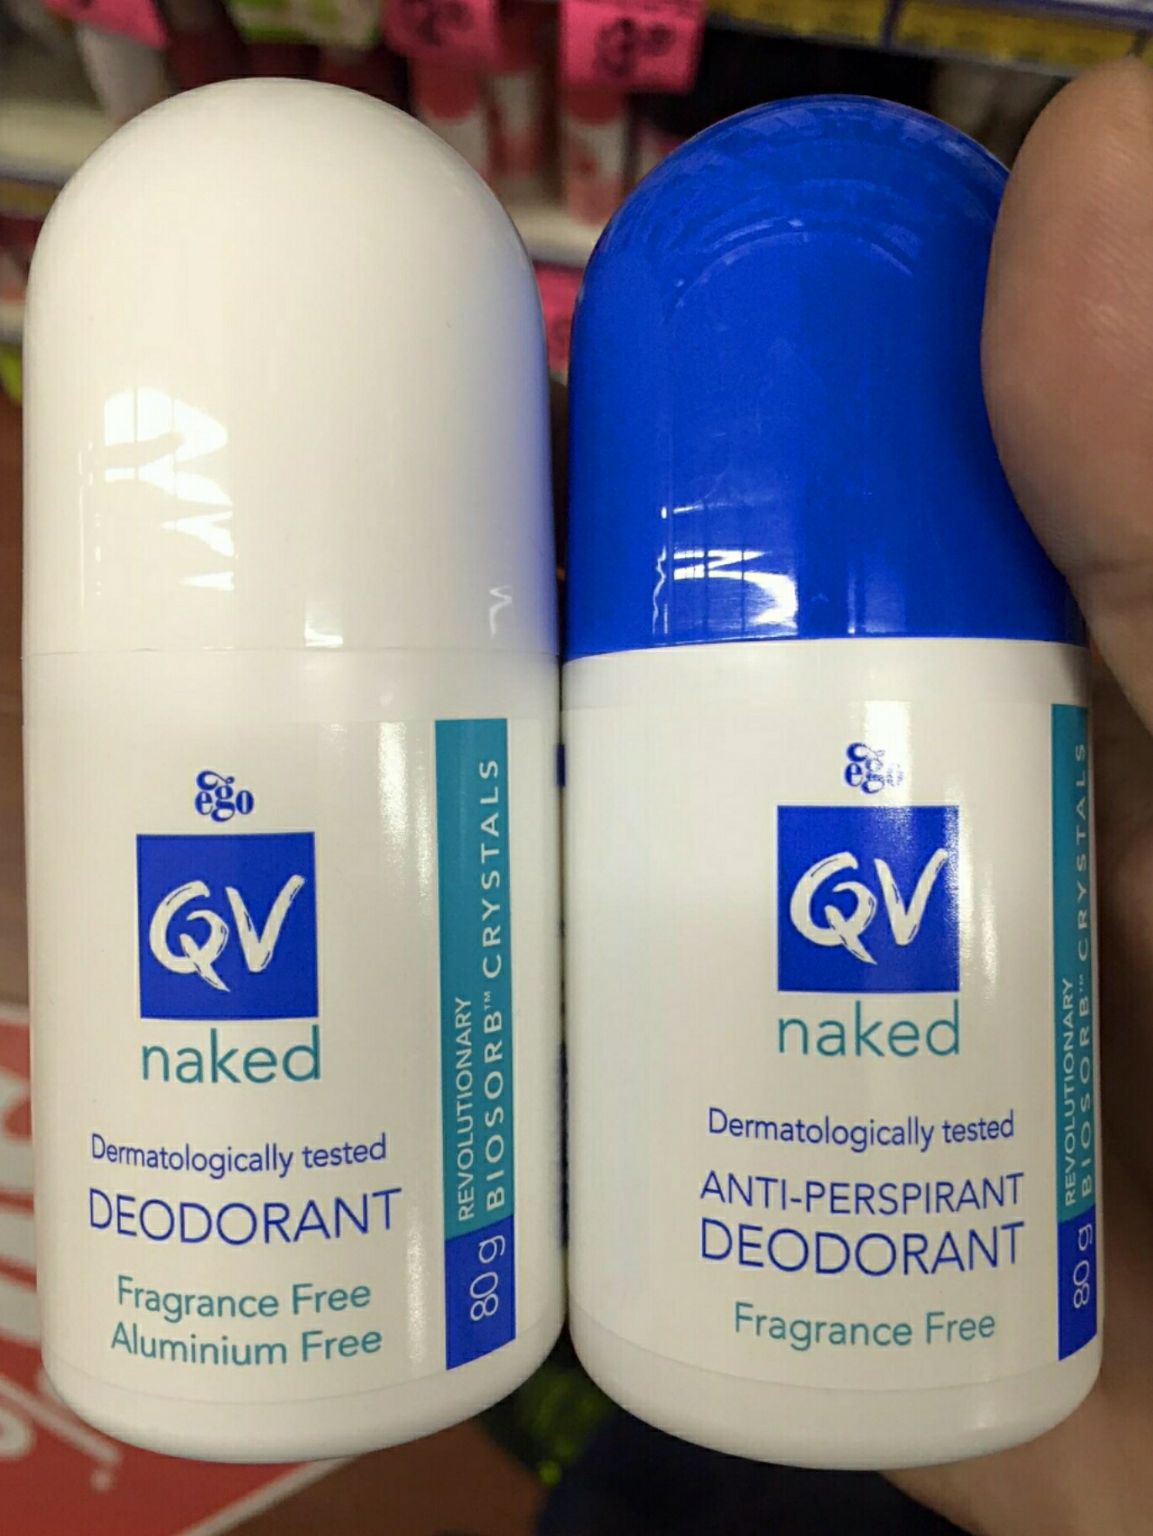 QV Naked Fragrance Free Aluminium Free Deodorant - Check 